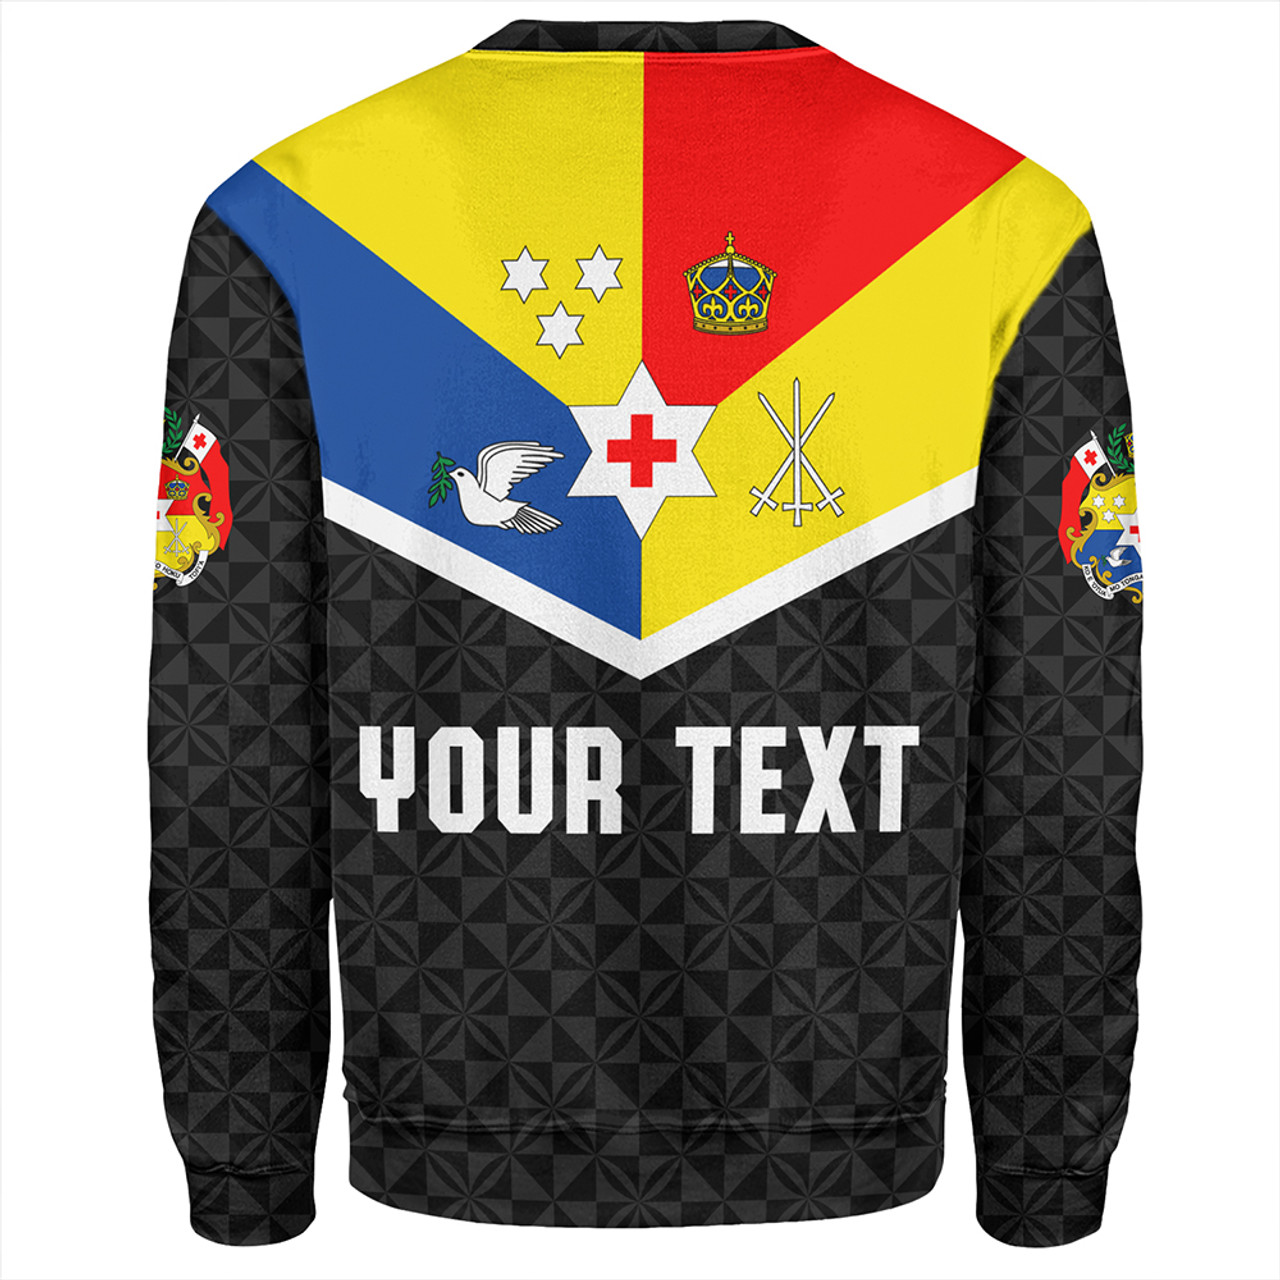 Tonga Sweatshirt Custom Coat Of Arm Sport Style